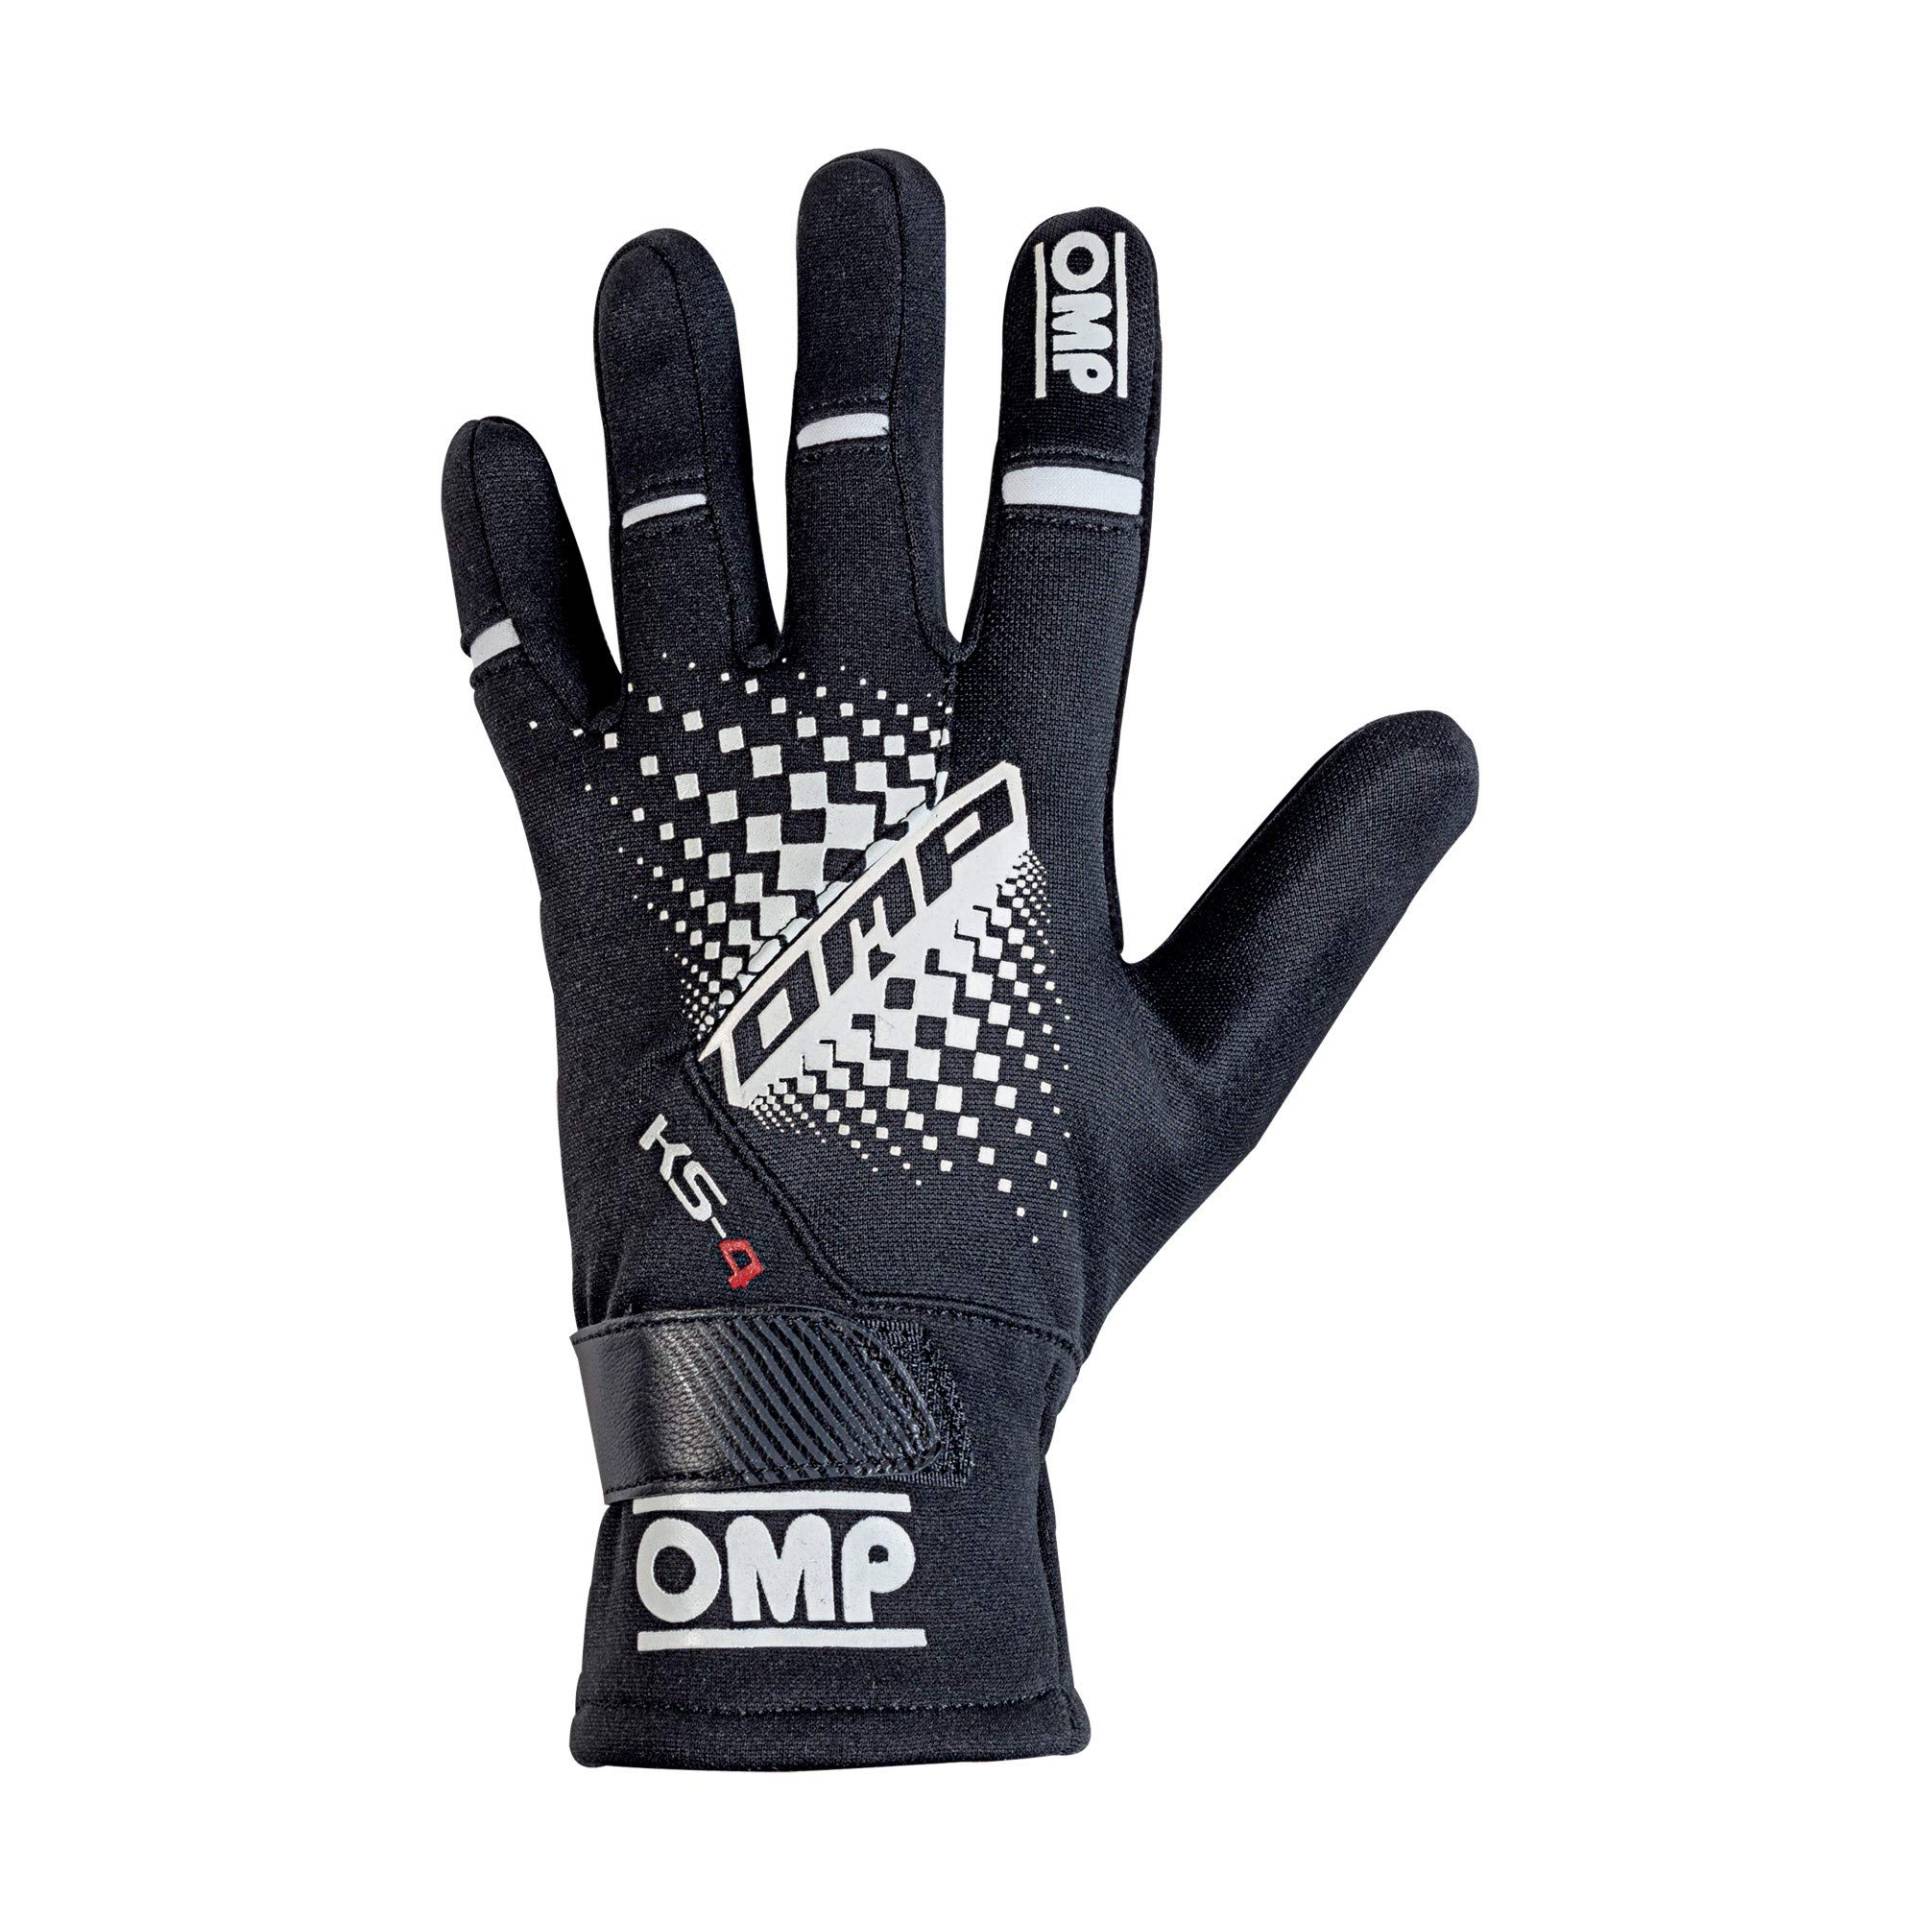 OMP OMPKK02744E071006 Ks-4 Handschuhe My2018 Size 6, schwarz / weiss von OMP